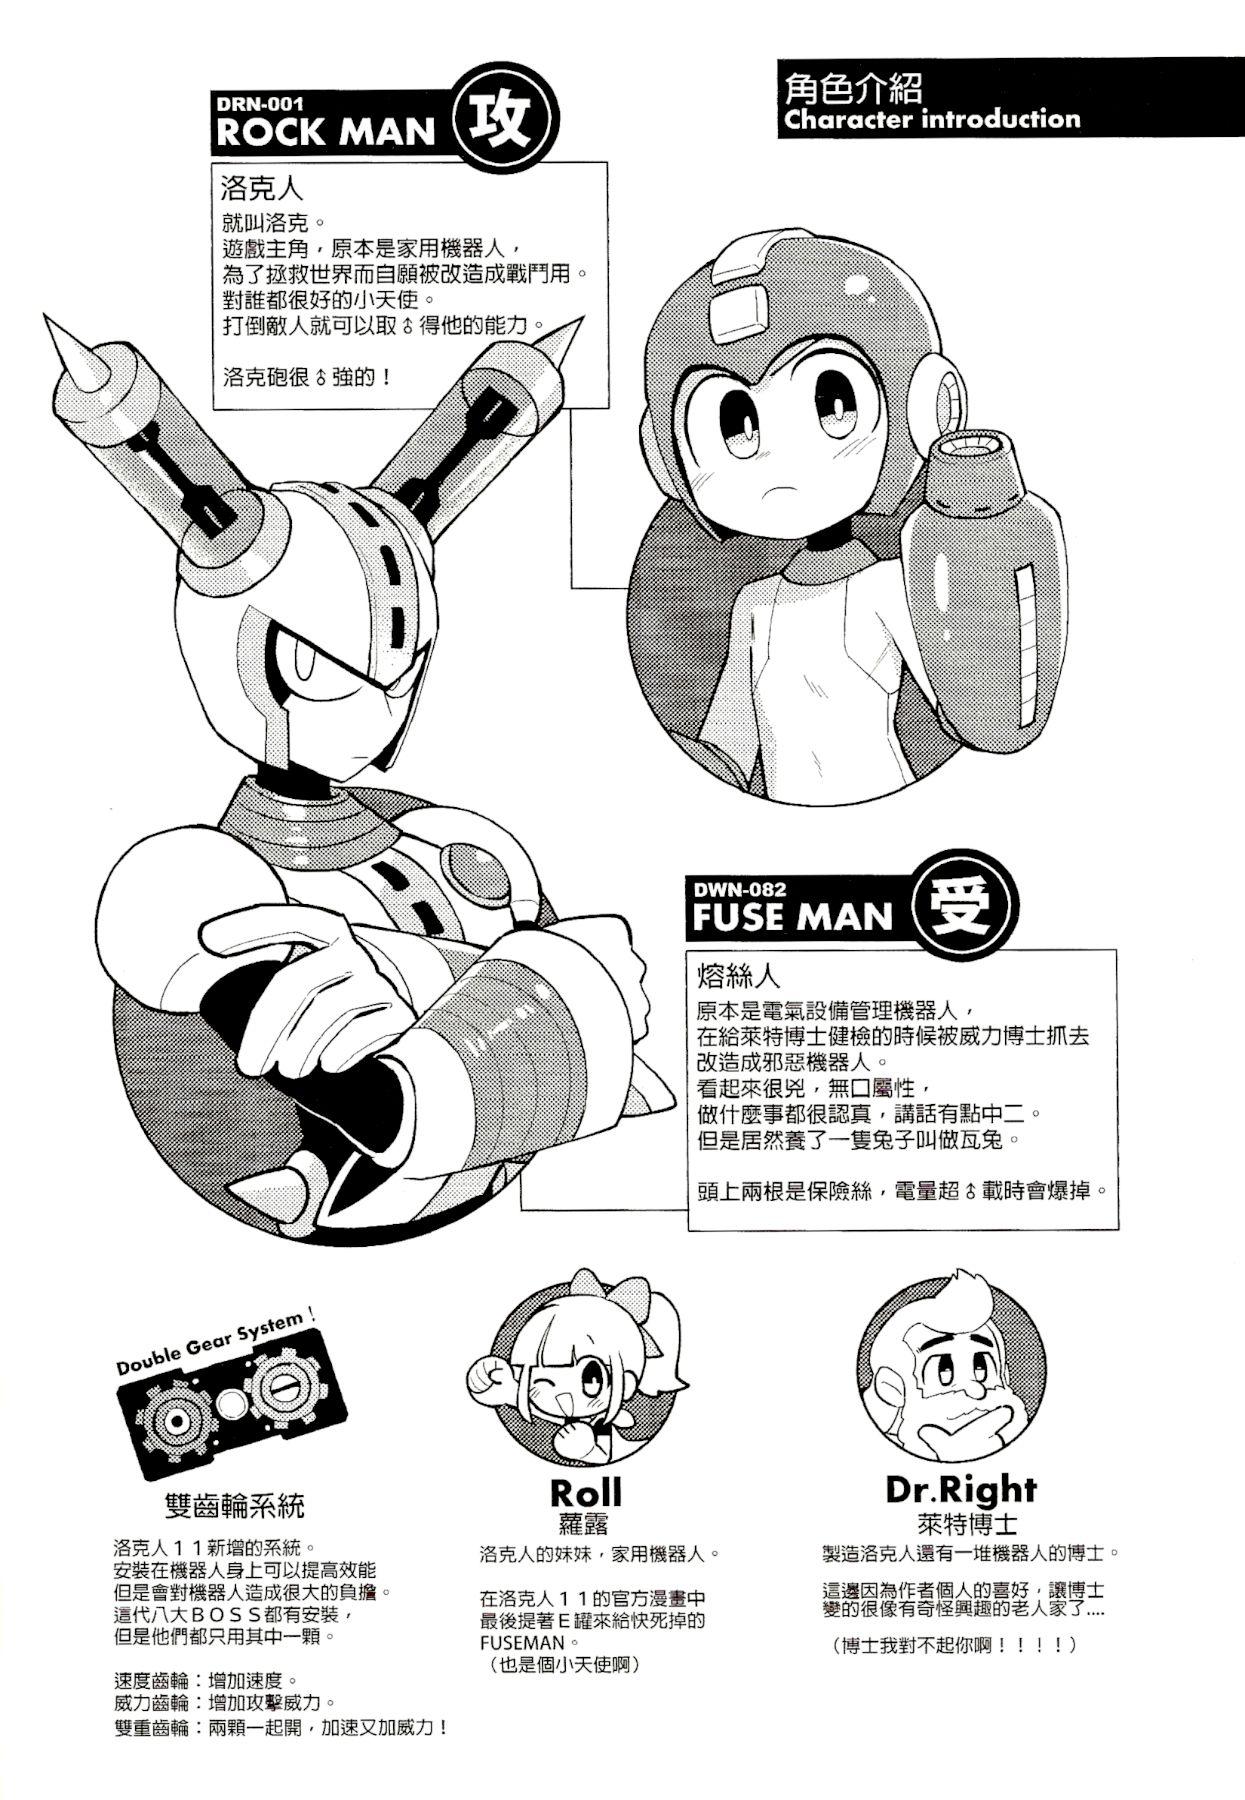 (Finish Prison) Luòkè rén 11-FUSEMAN gōnglüè běn | "Rockman 11-FUSEMAN Raiders" (Mega Man) 2